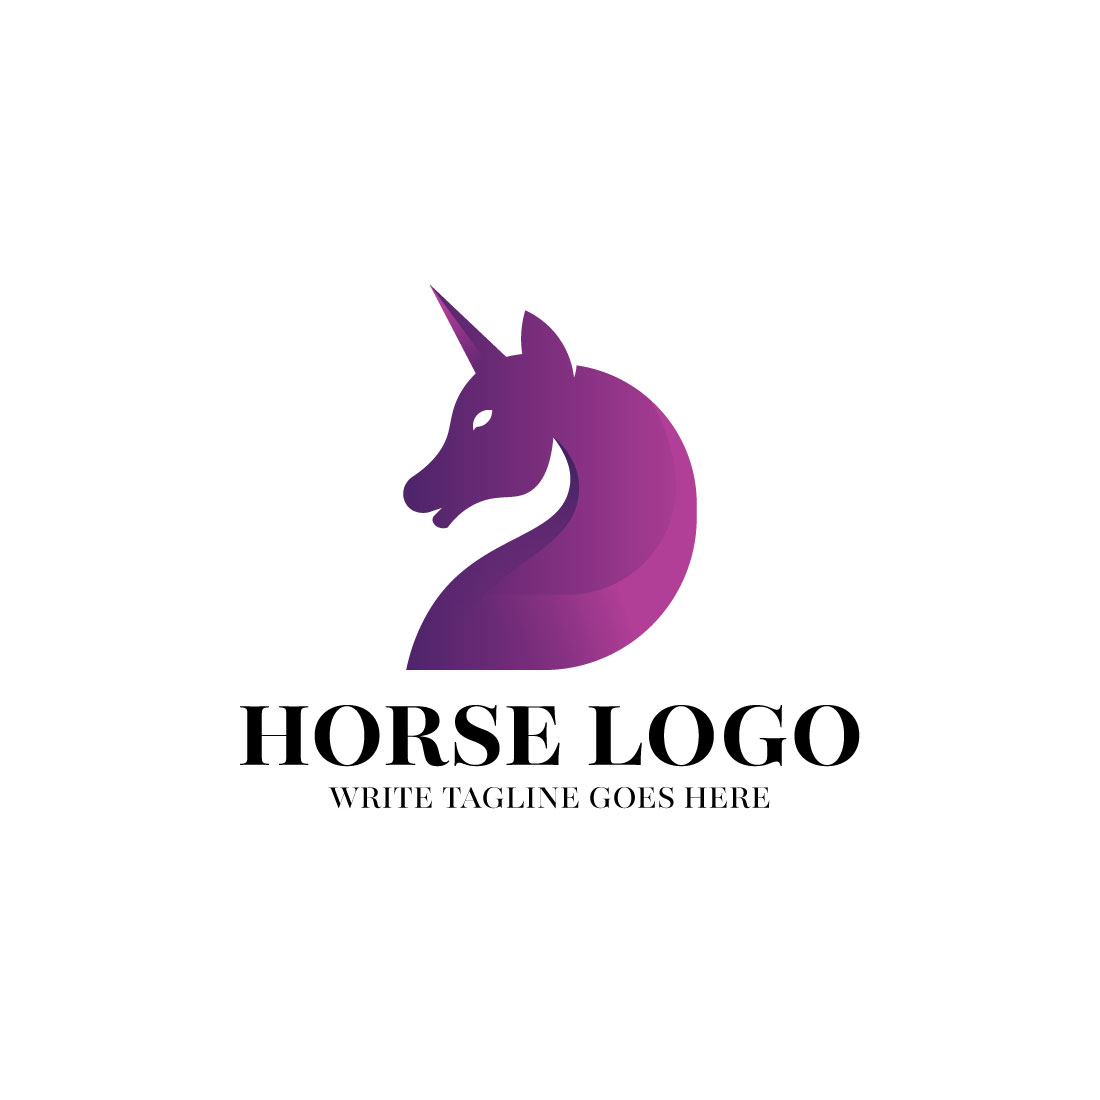 Horse logo gradient logo design preview image.